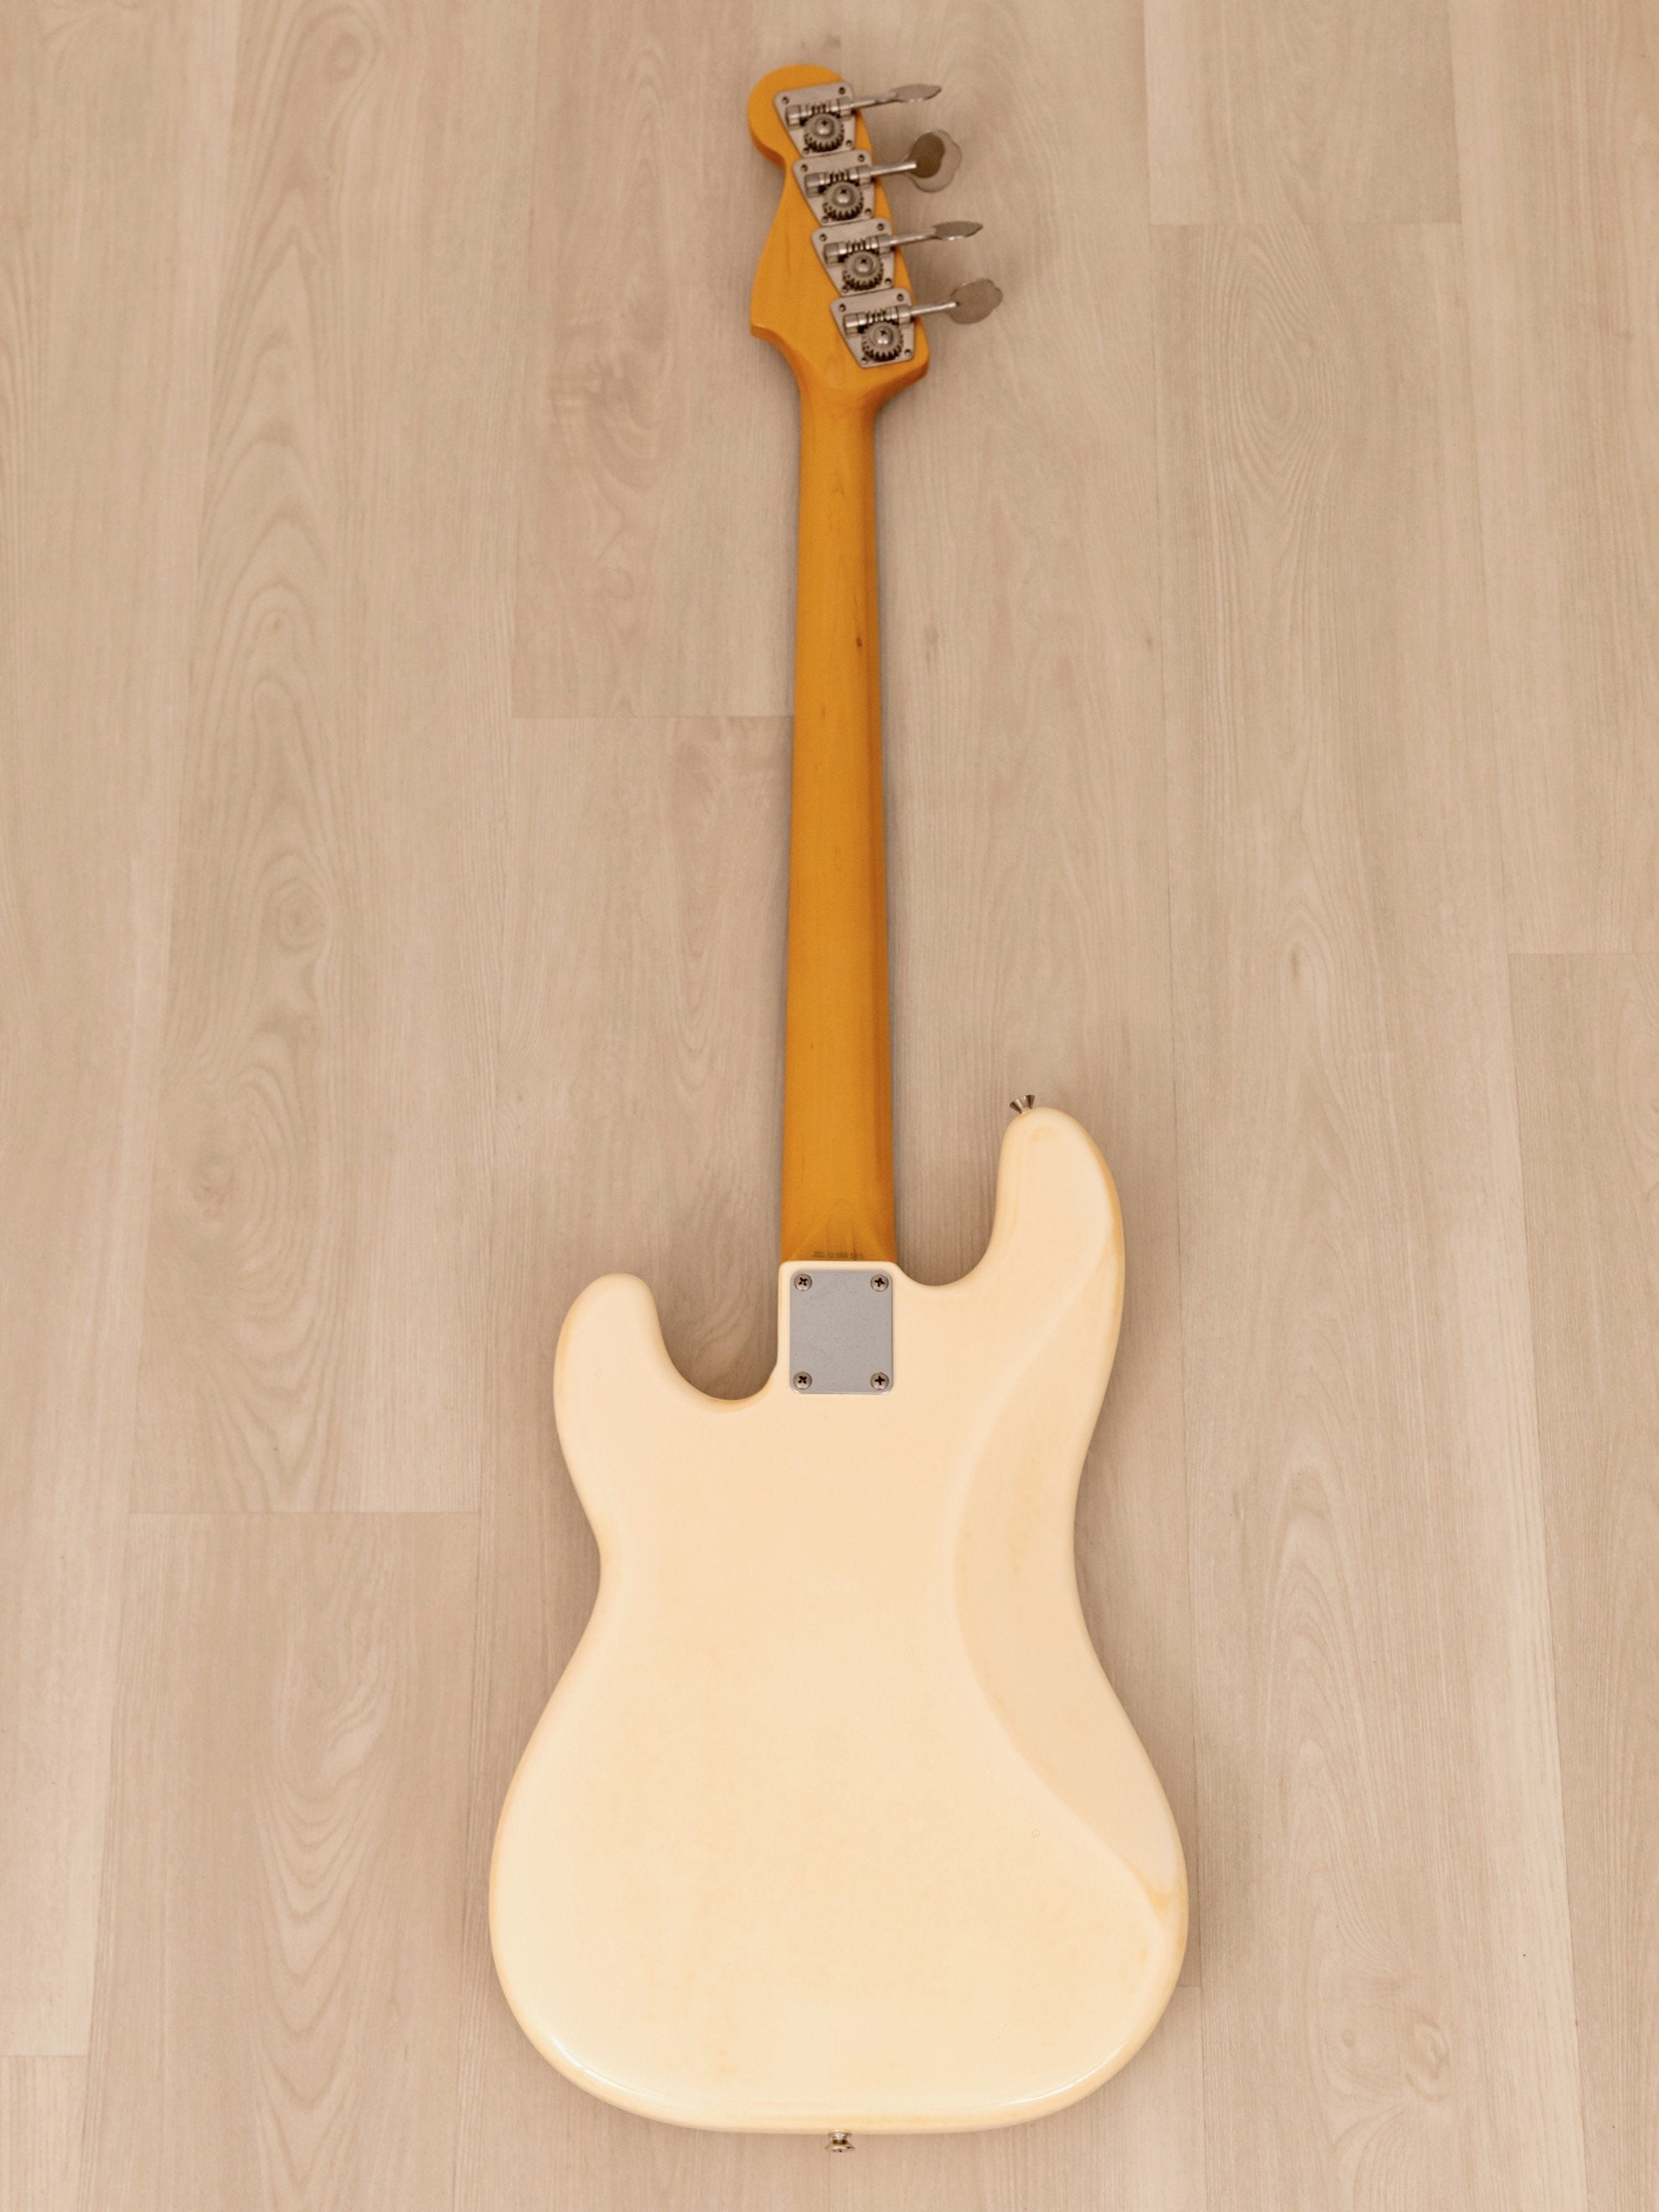 2004 Fender Precision Bass '70 Vintage Reissue PB70-70US Olympic White, Japan CIJ